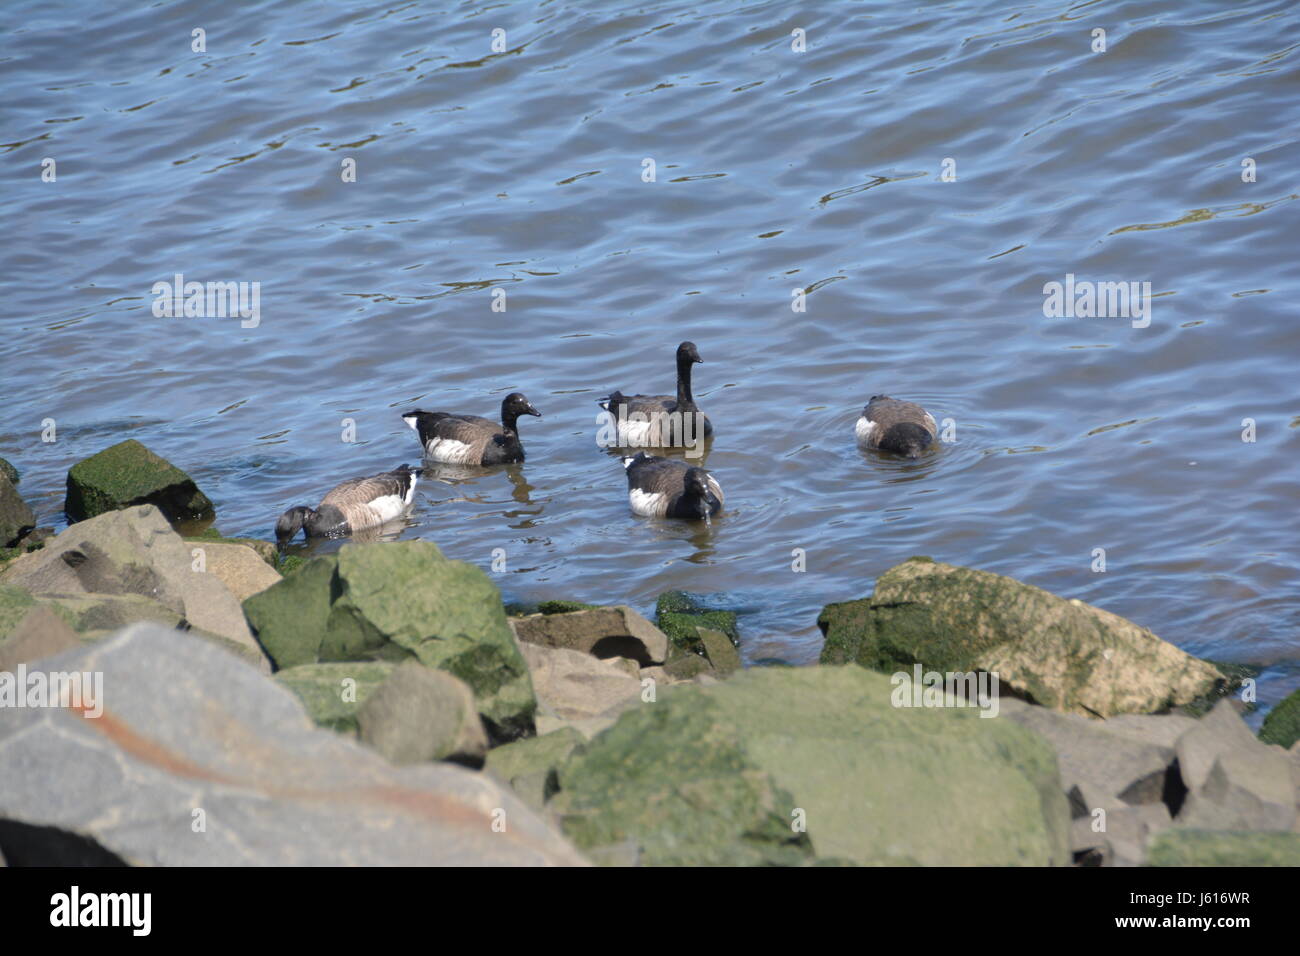 Ducks swimming along the rocks Stock Photo